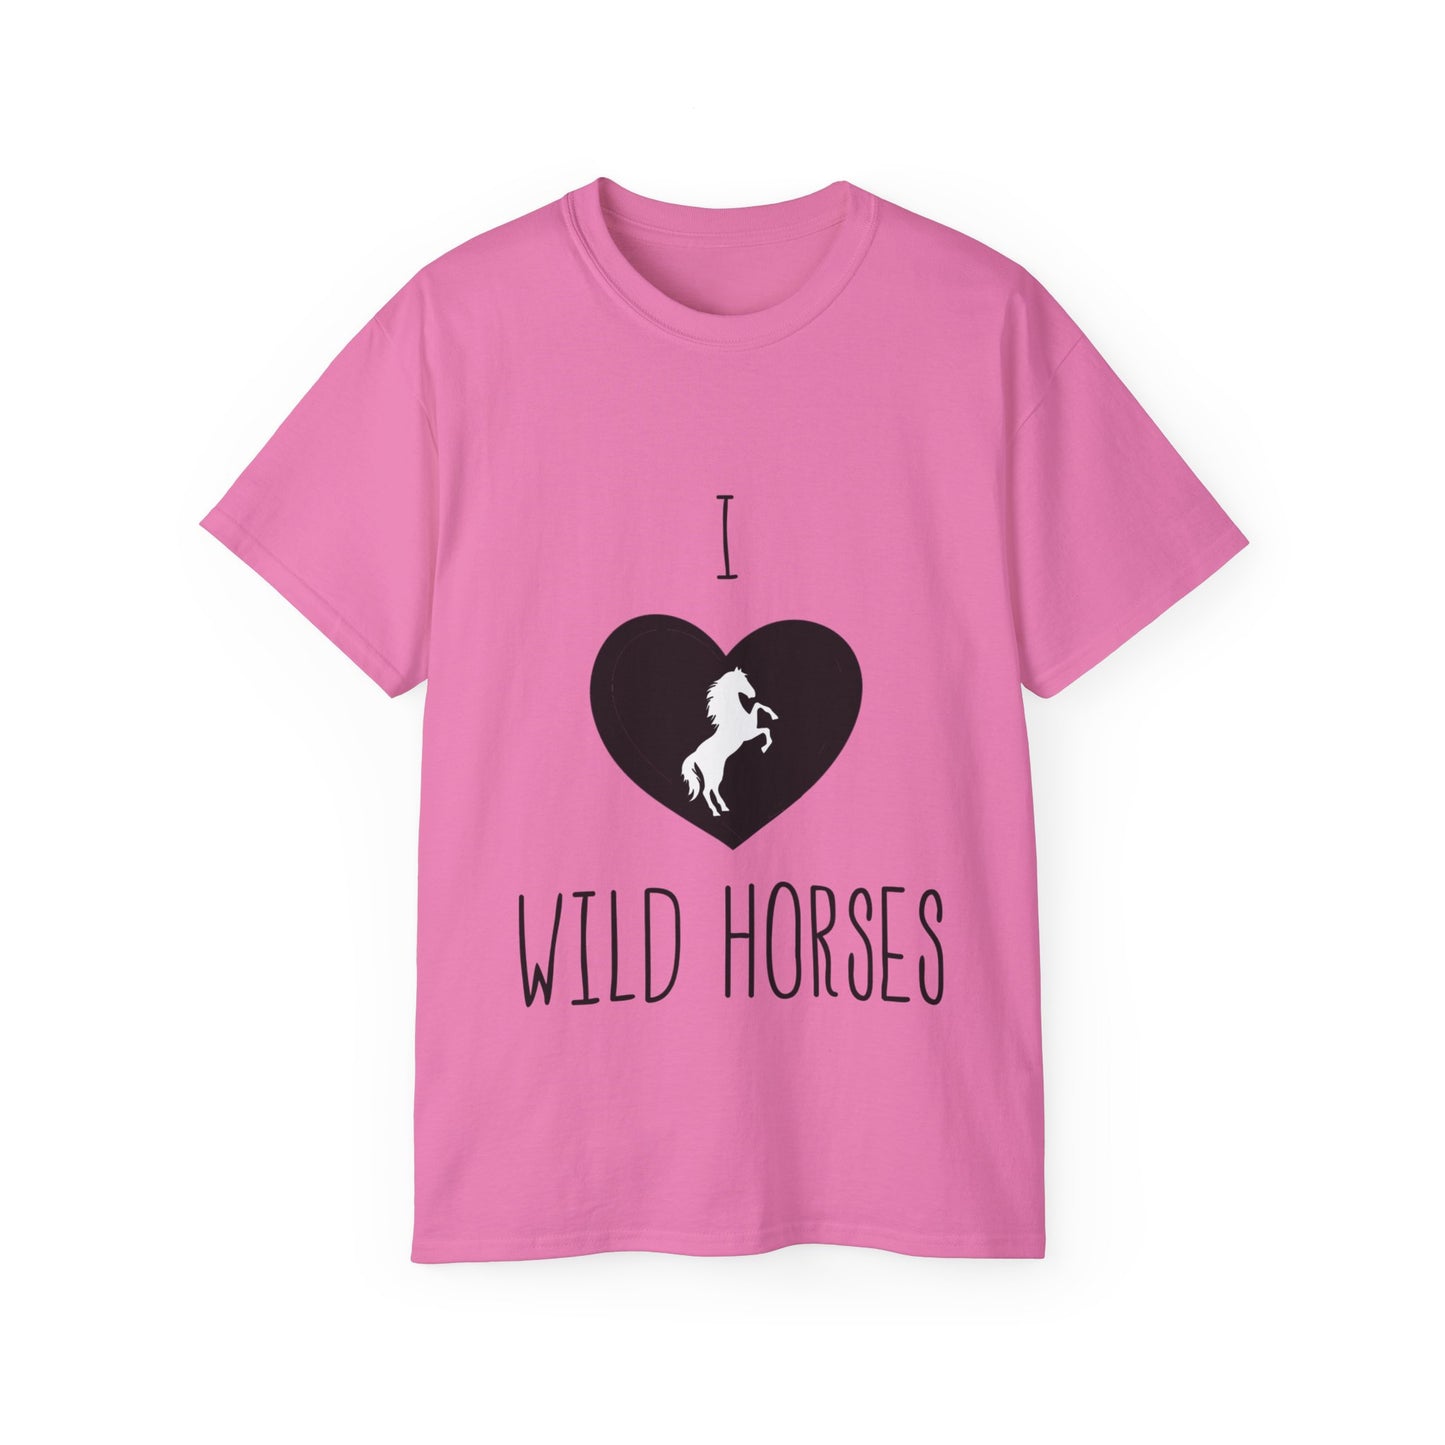 "I <3 Wild Horses" Cotton Tee